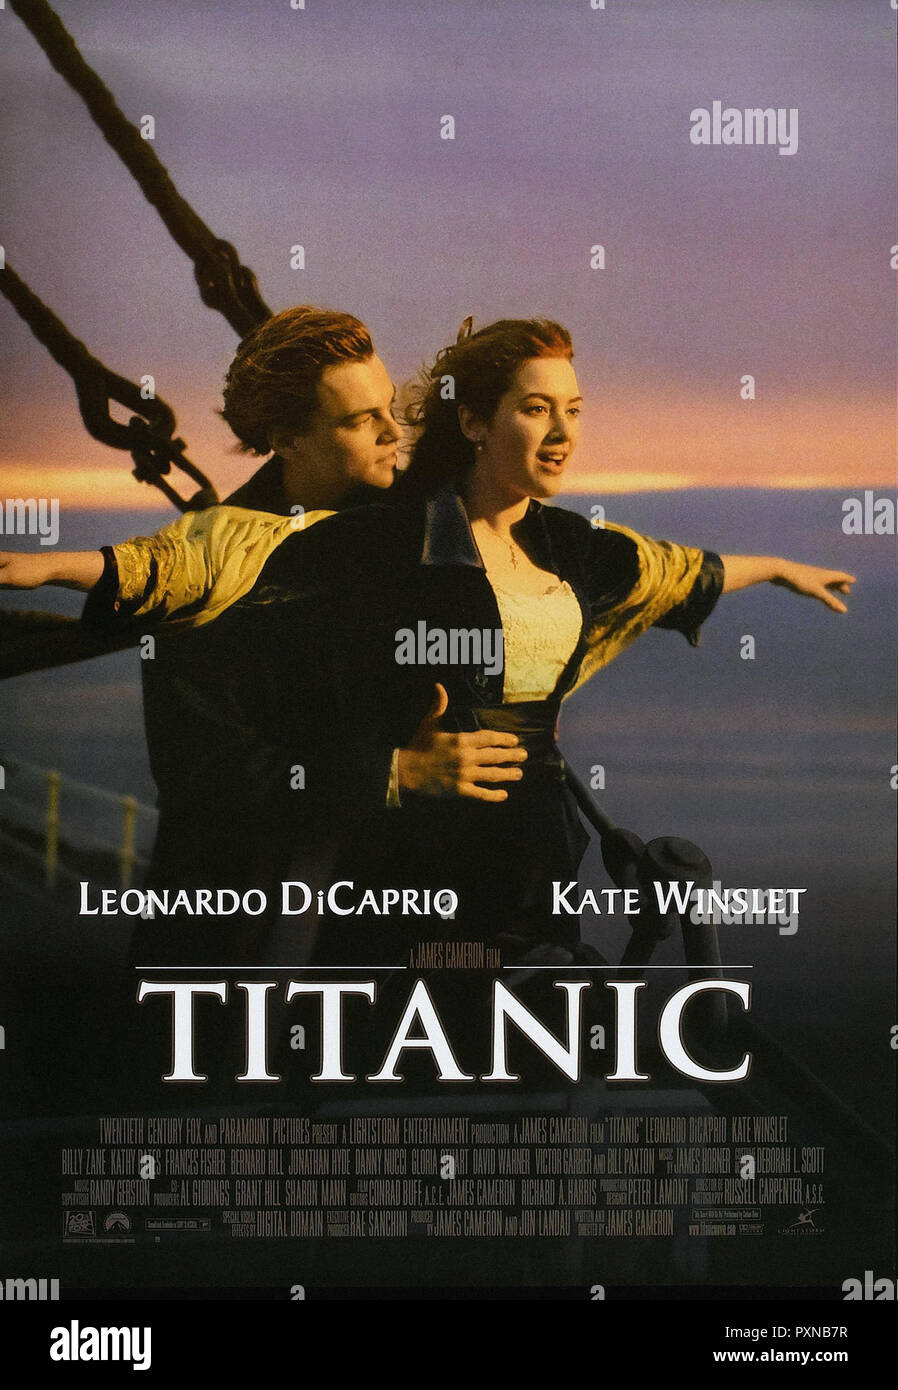 Titanic - Original movie poster Stock Photo - Alamy